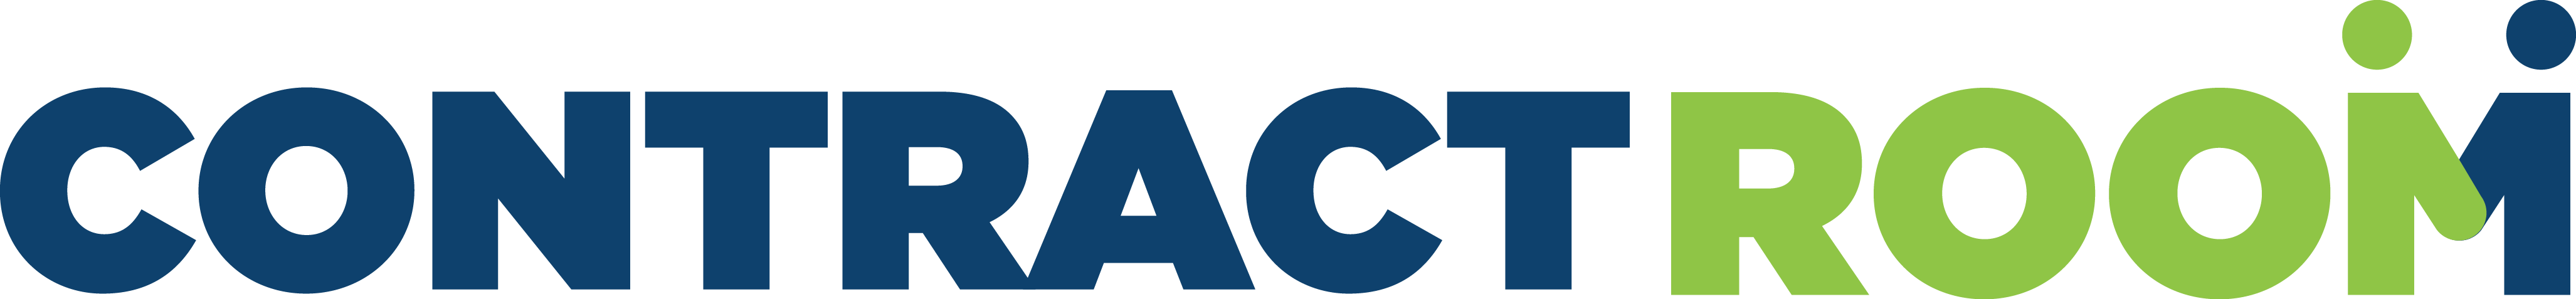 Contract Room Logo (4108x477)